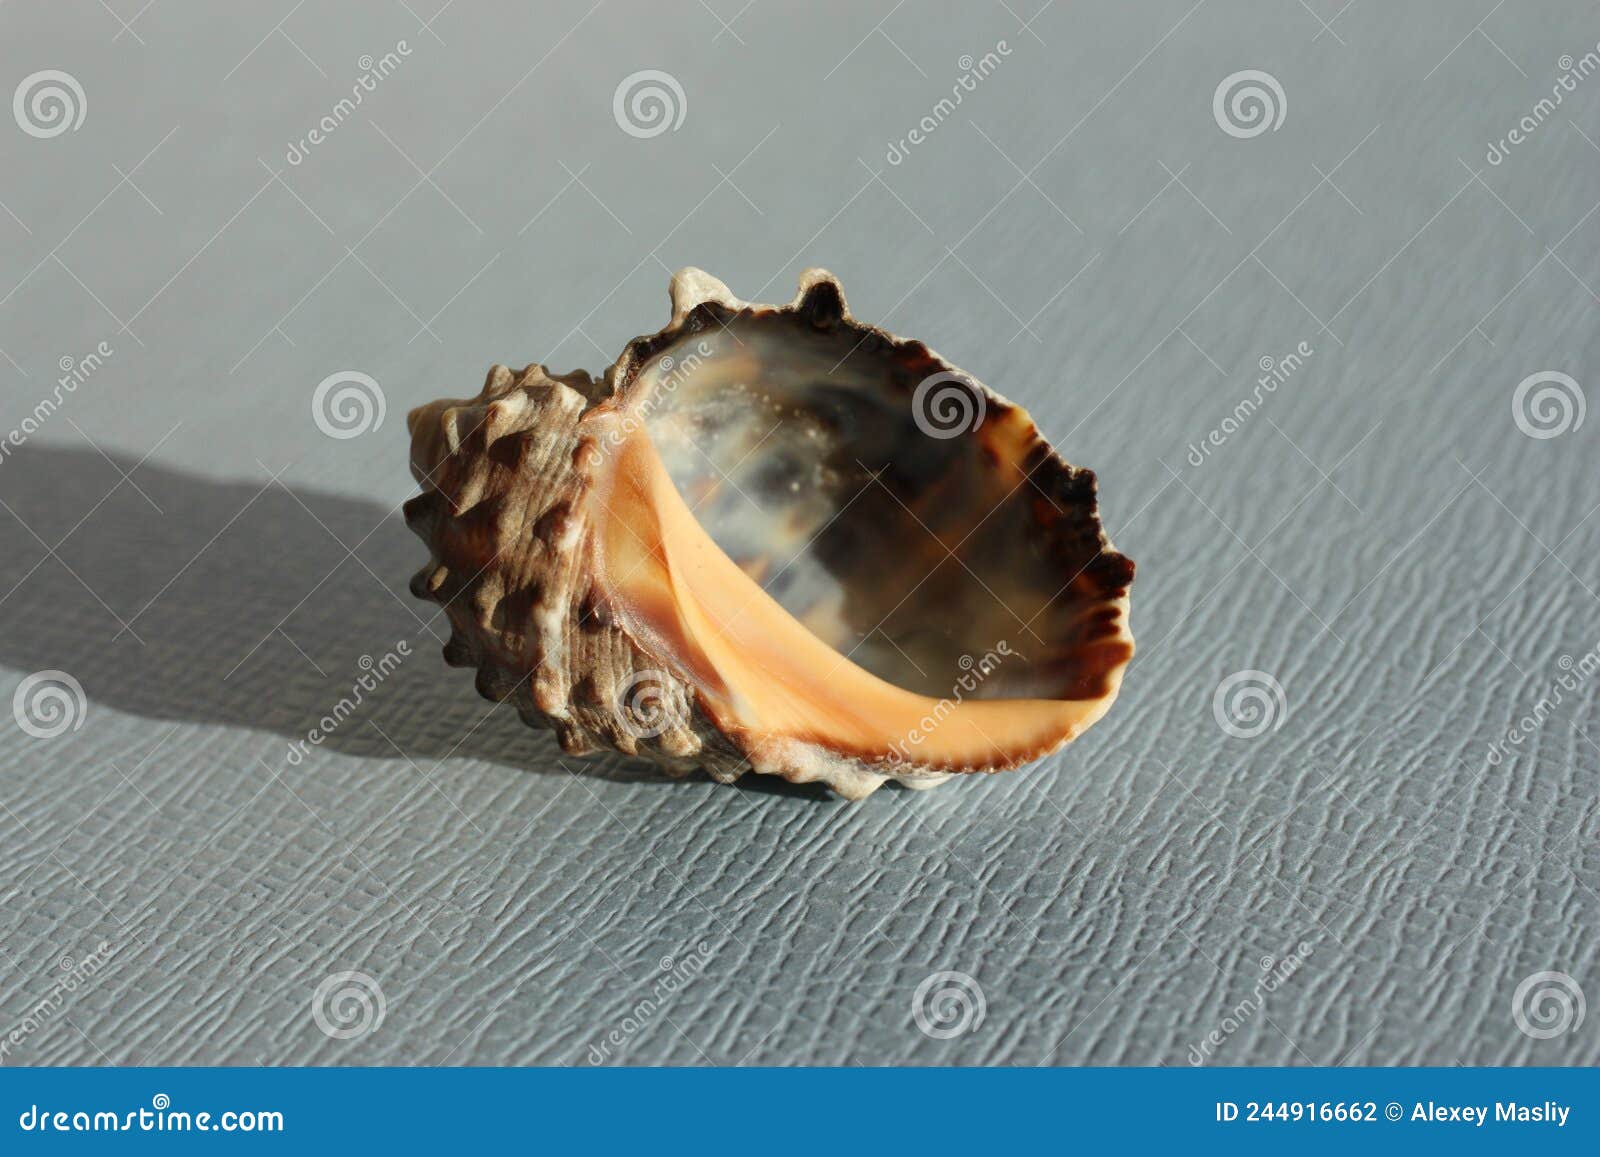 seashell of sea snail widemouth rockshell or wide-mouthed purpura, wide-mouthed dye shell plicopurpura patula on a blue background